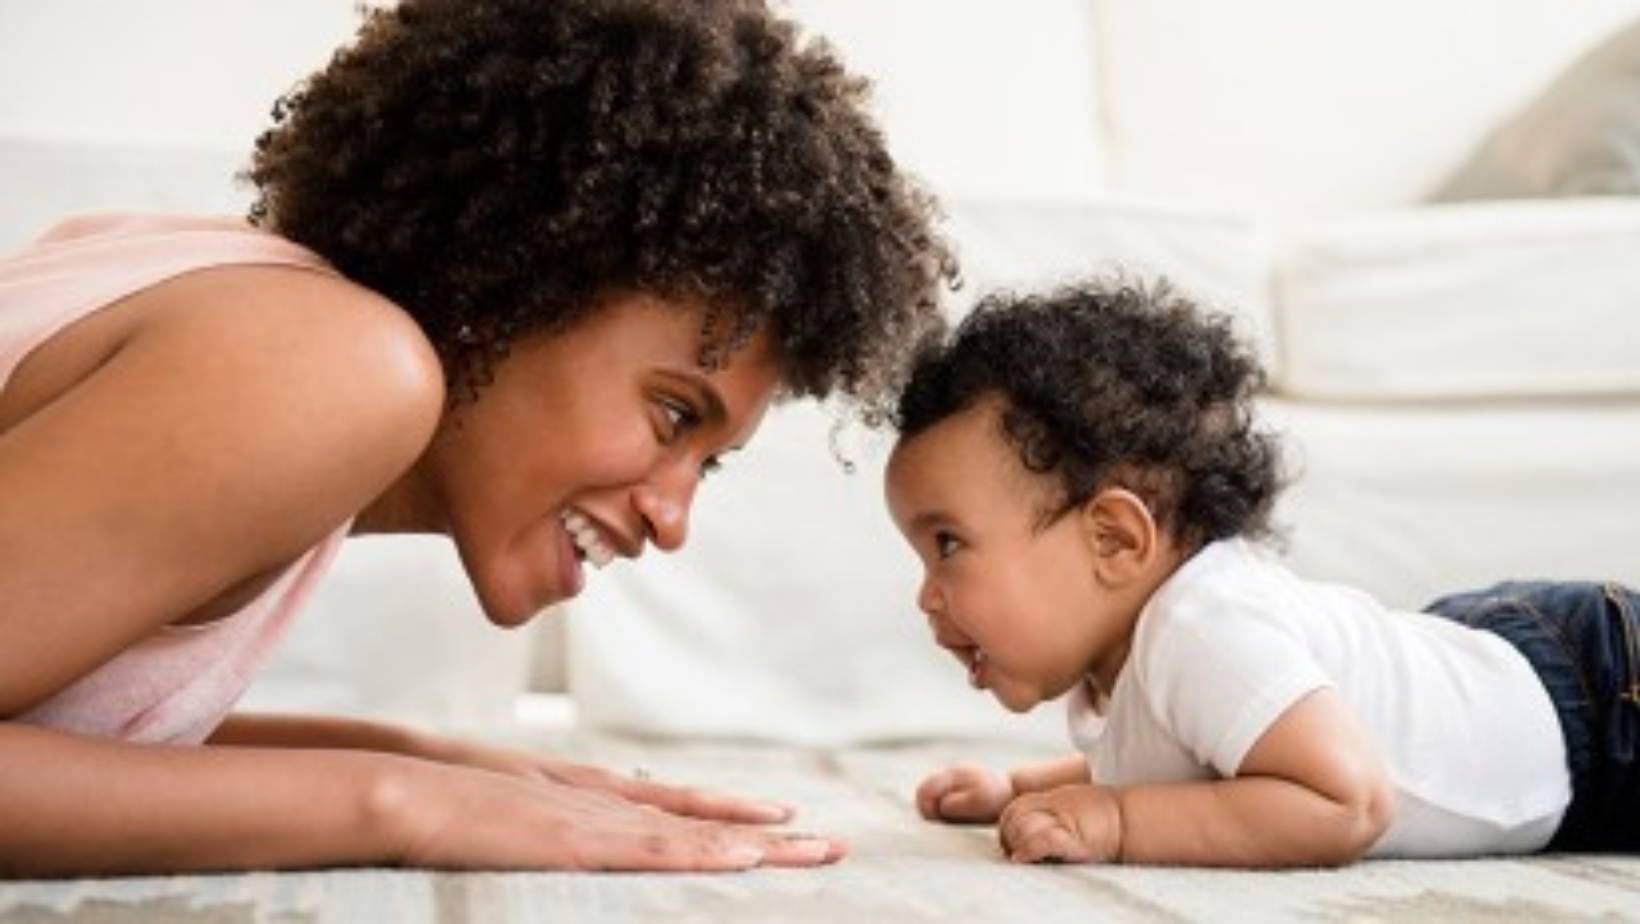 How to make tummy time more enjoyable for babies